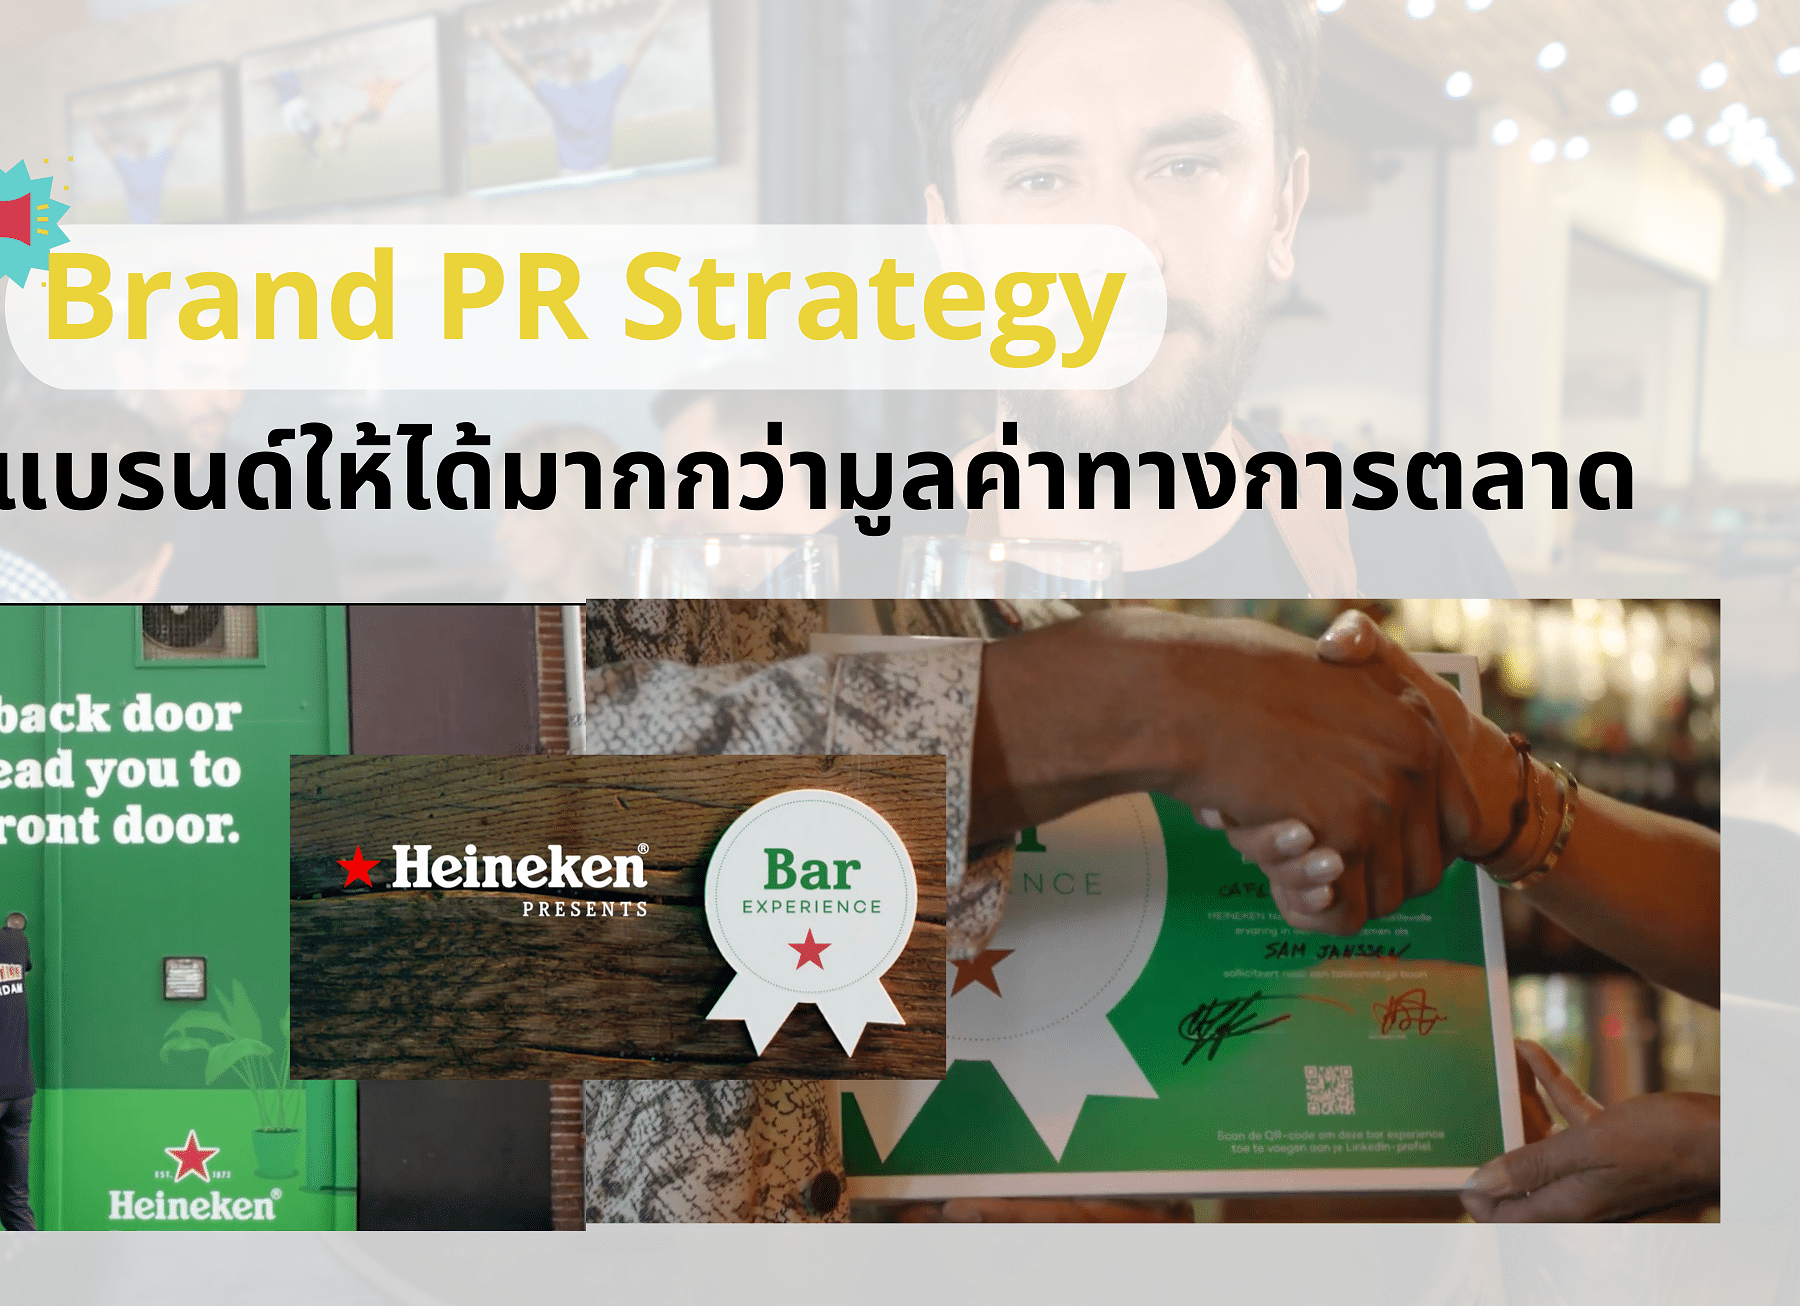 Brand PR Strategy การโปรโมทแบรนด์ที่ได้มากกว่ามูลค่าทางการตลาด